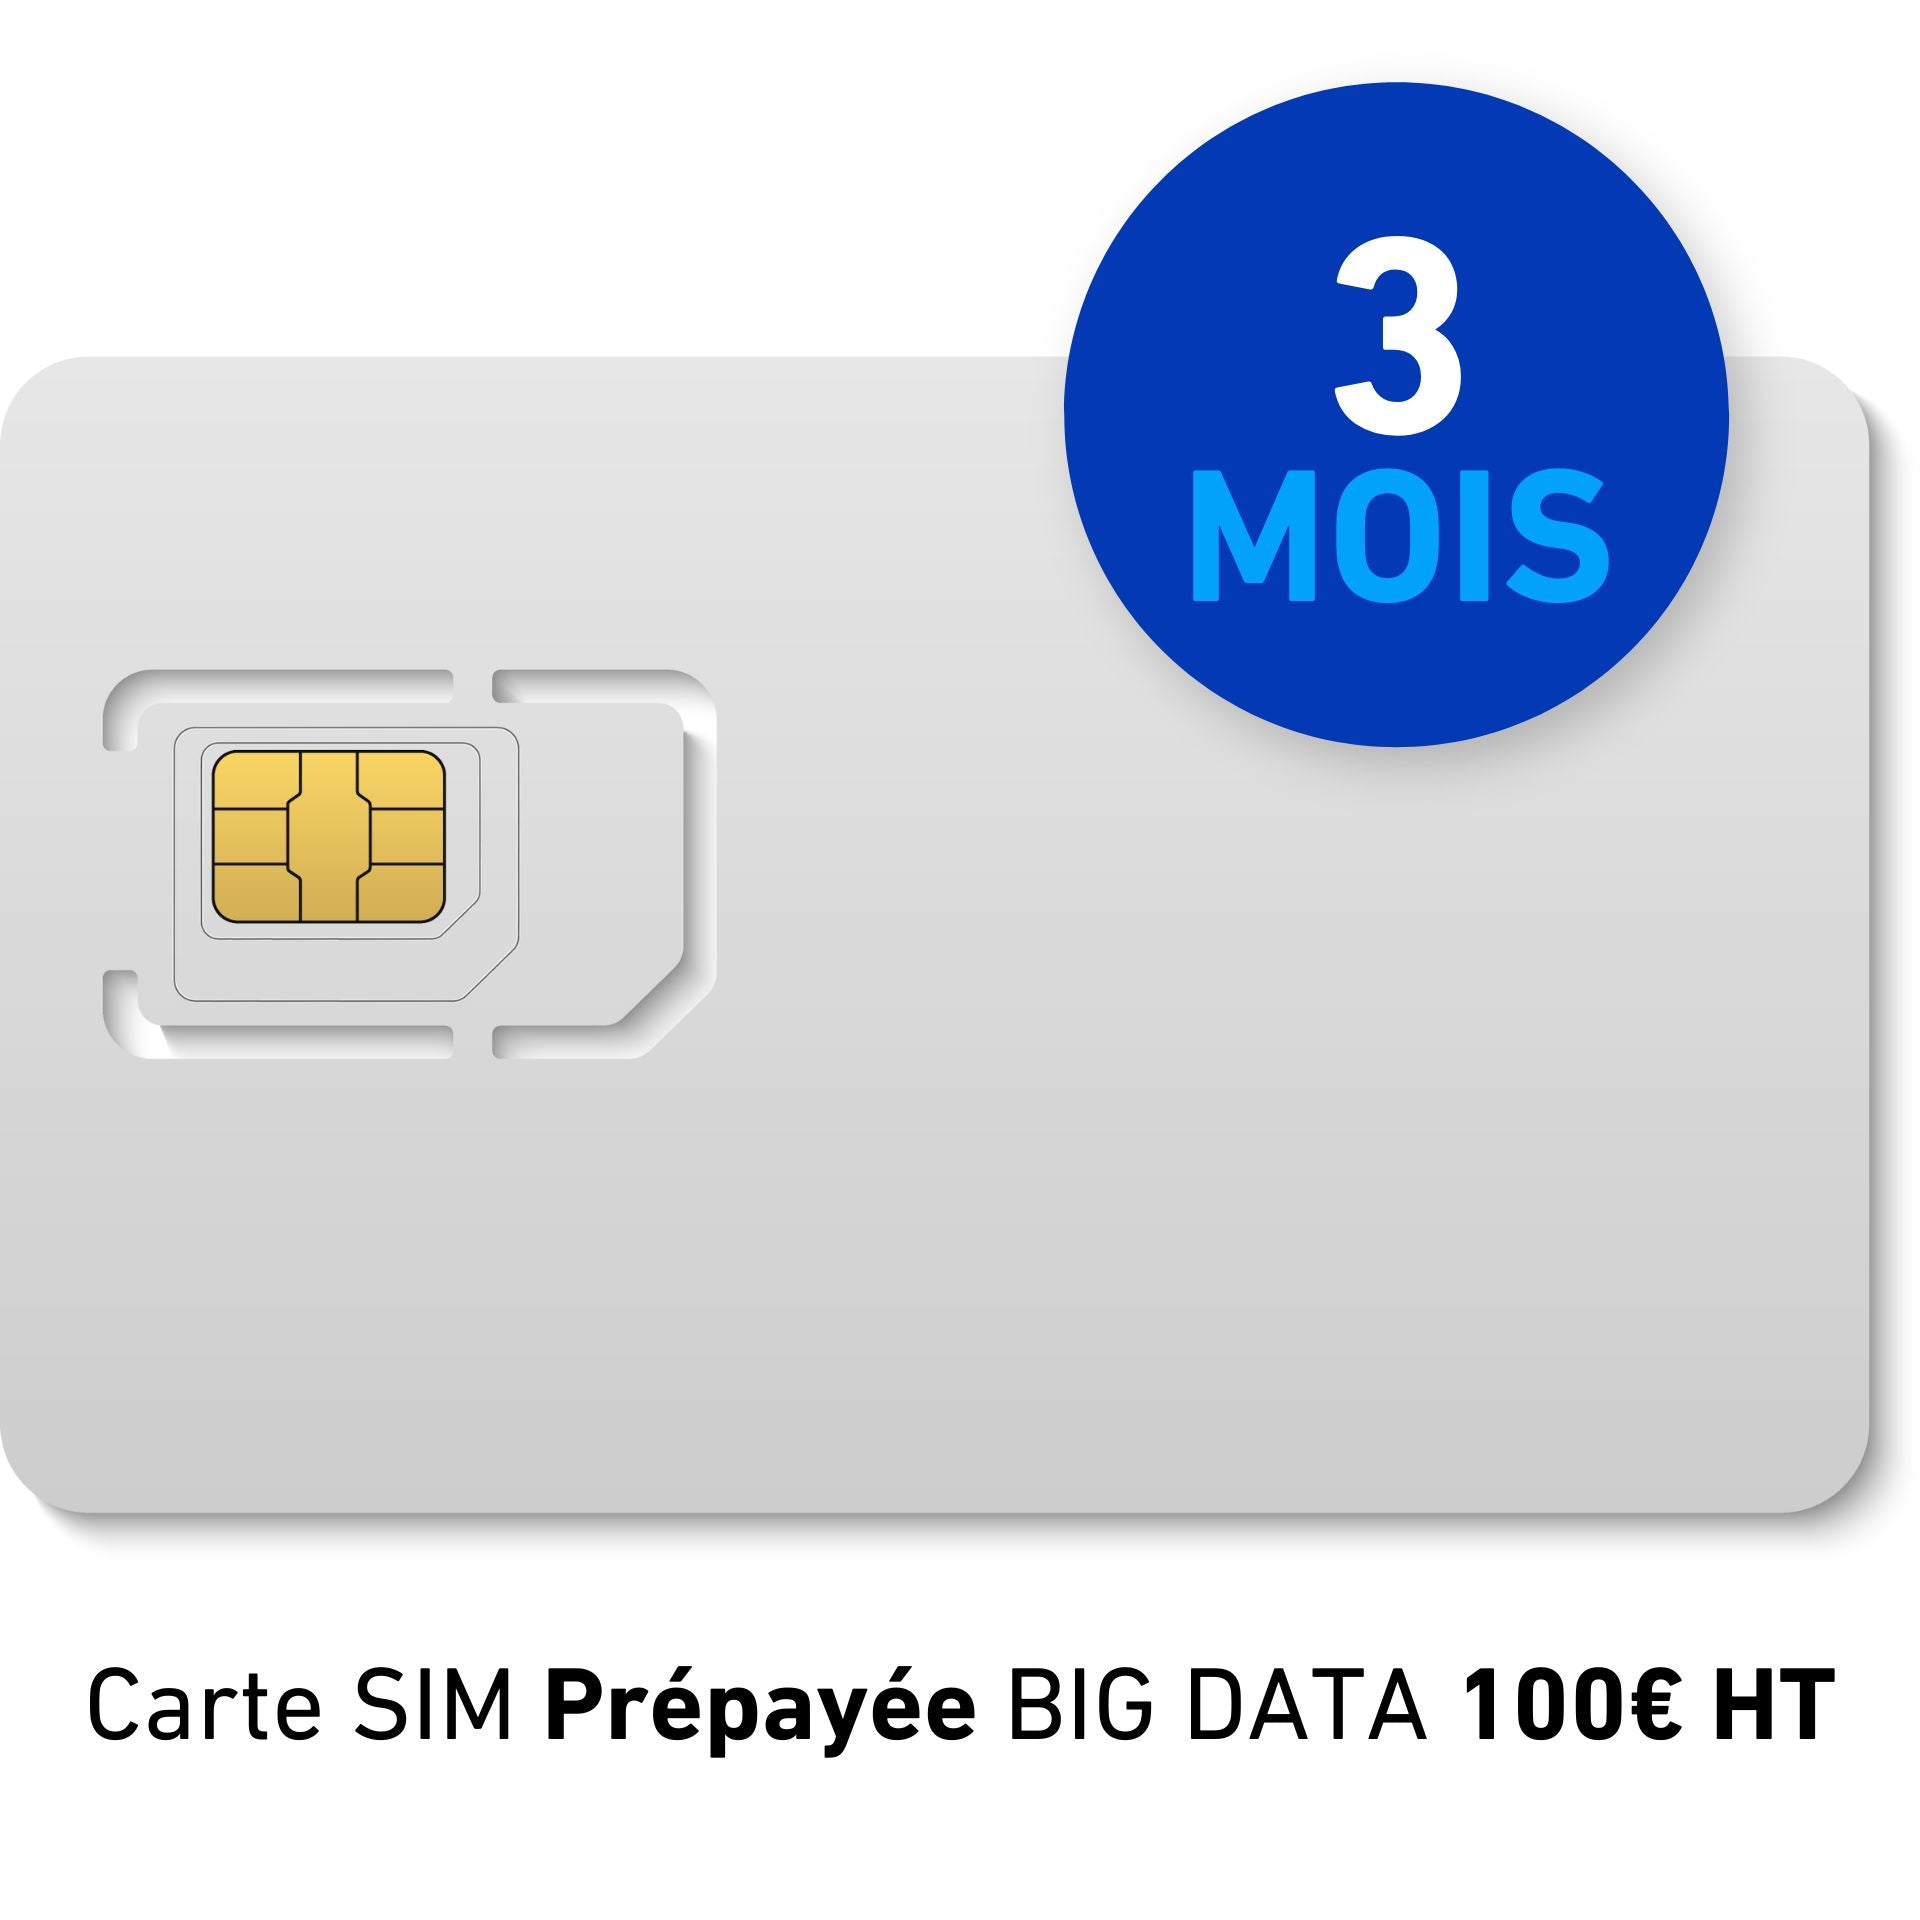 Carte SIM Prépayée BIG DATA 100 € HT - VALIDITE 3 MOIS